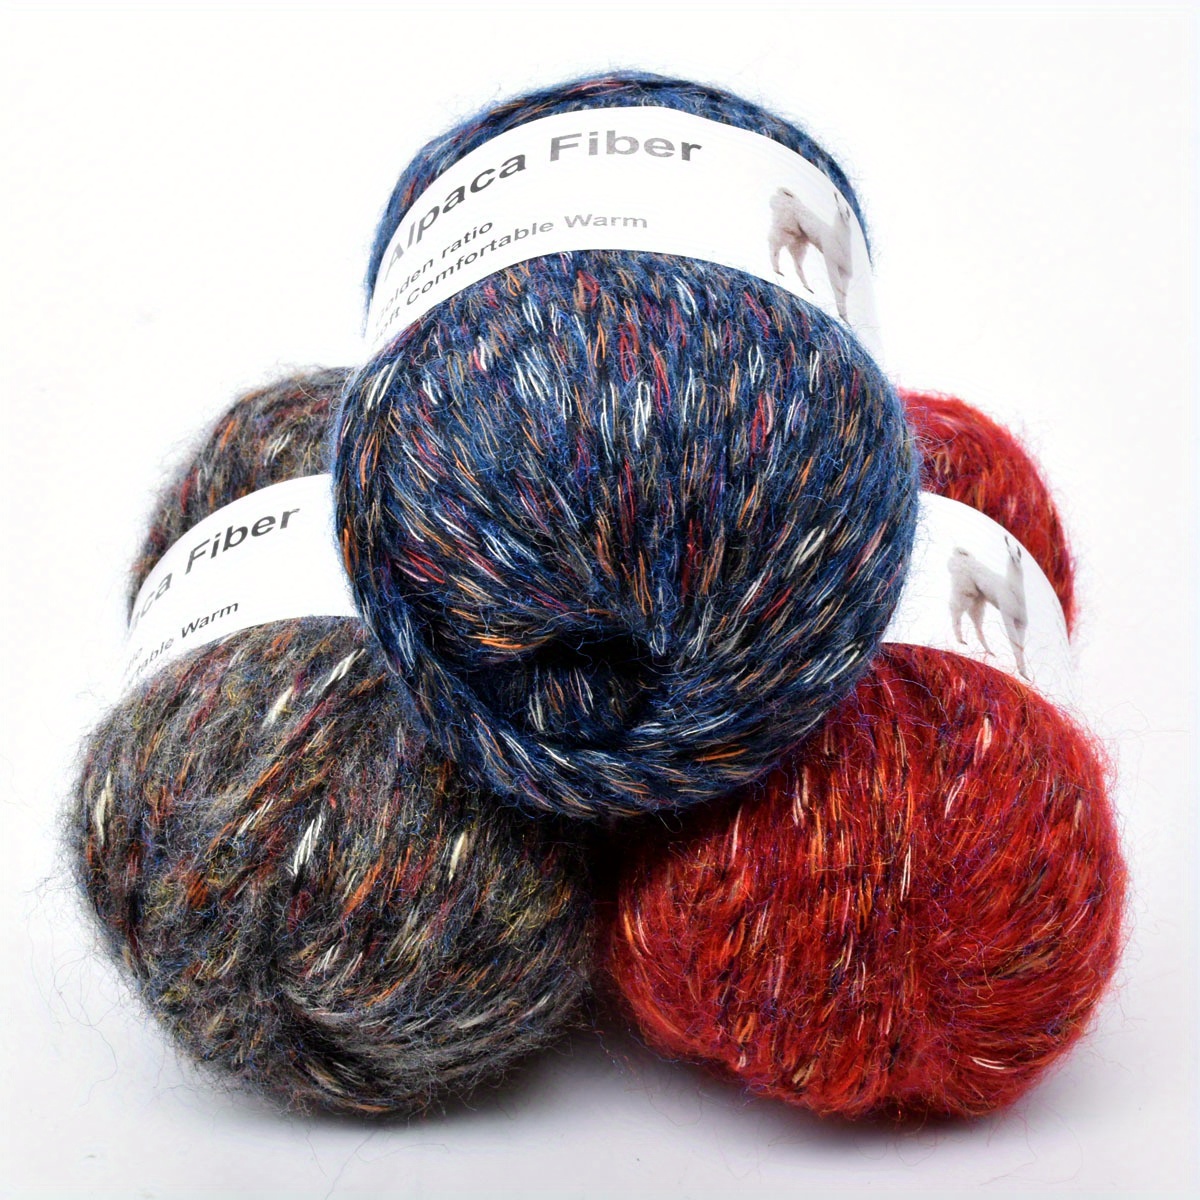 Beginners Crochet Yarn Knitting Yarn DIY Colorful Wool Yarn Knitting Thread for Gloves Scarves Bags Carpets Sewing Style A, Size: 45m